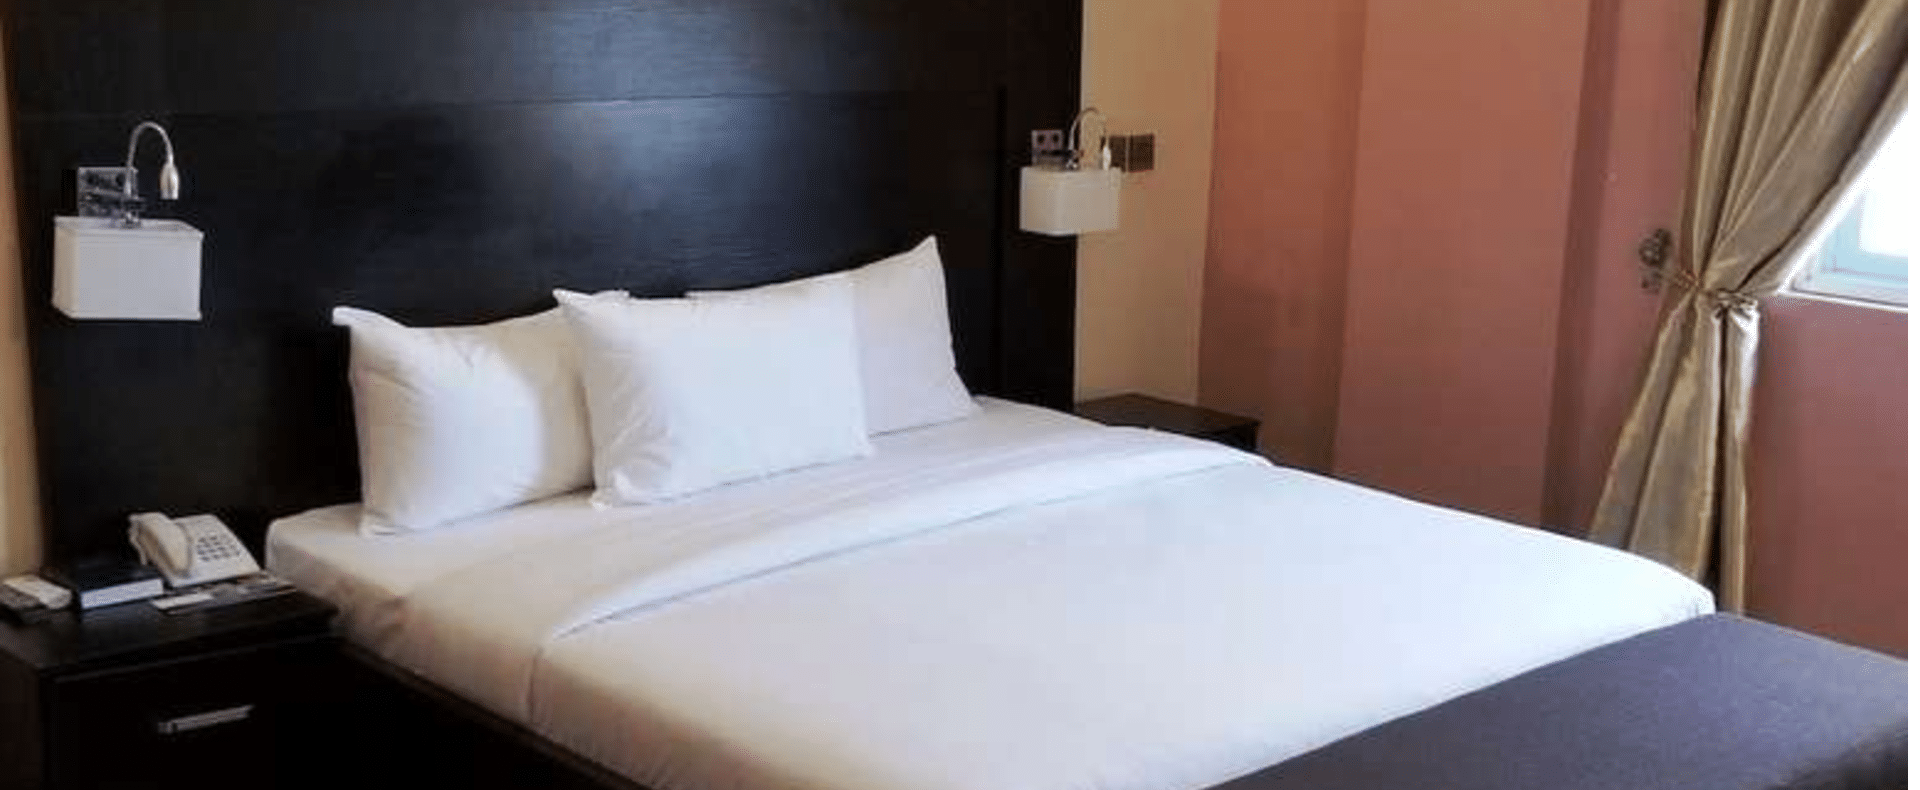 Hotel Deluxe Room In Sagamu Nigeria